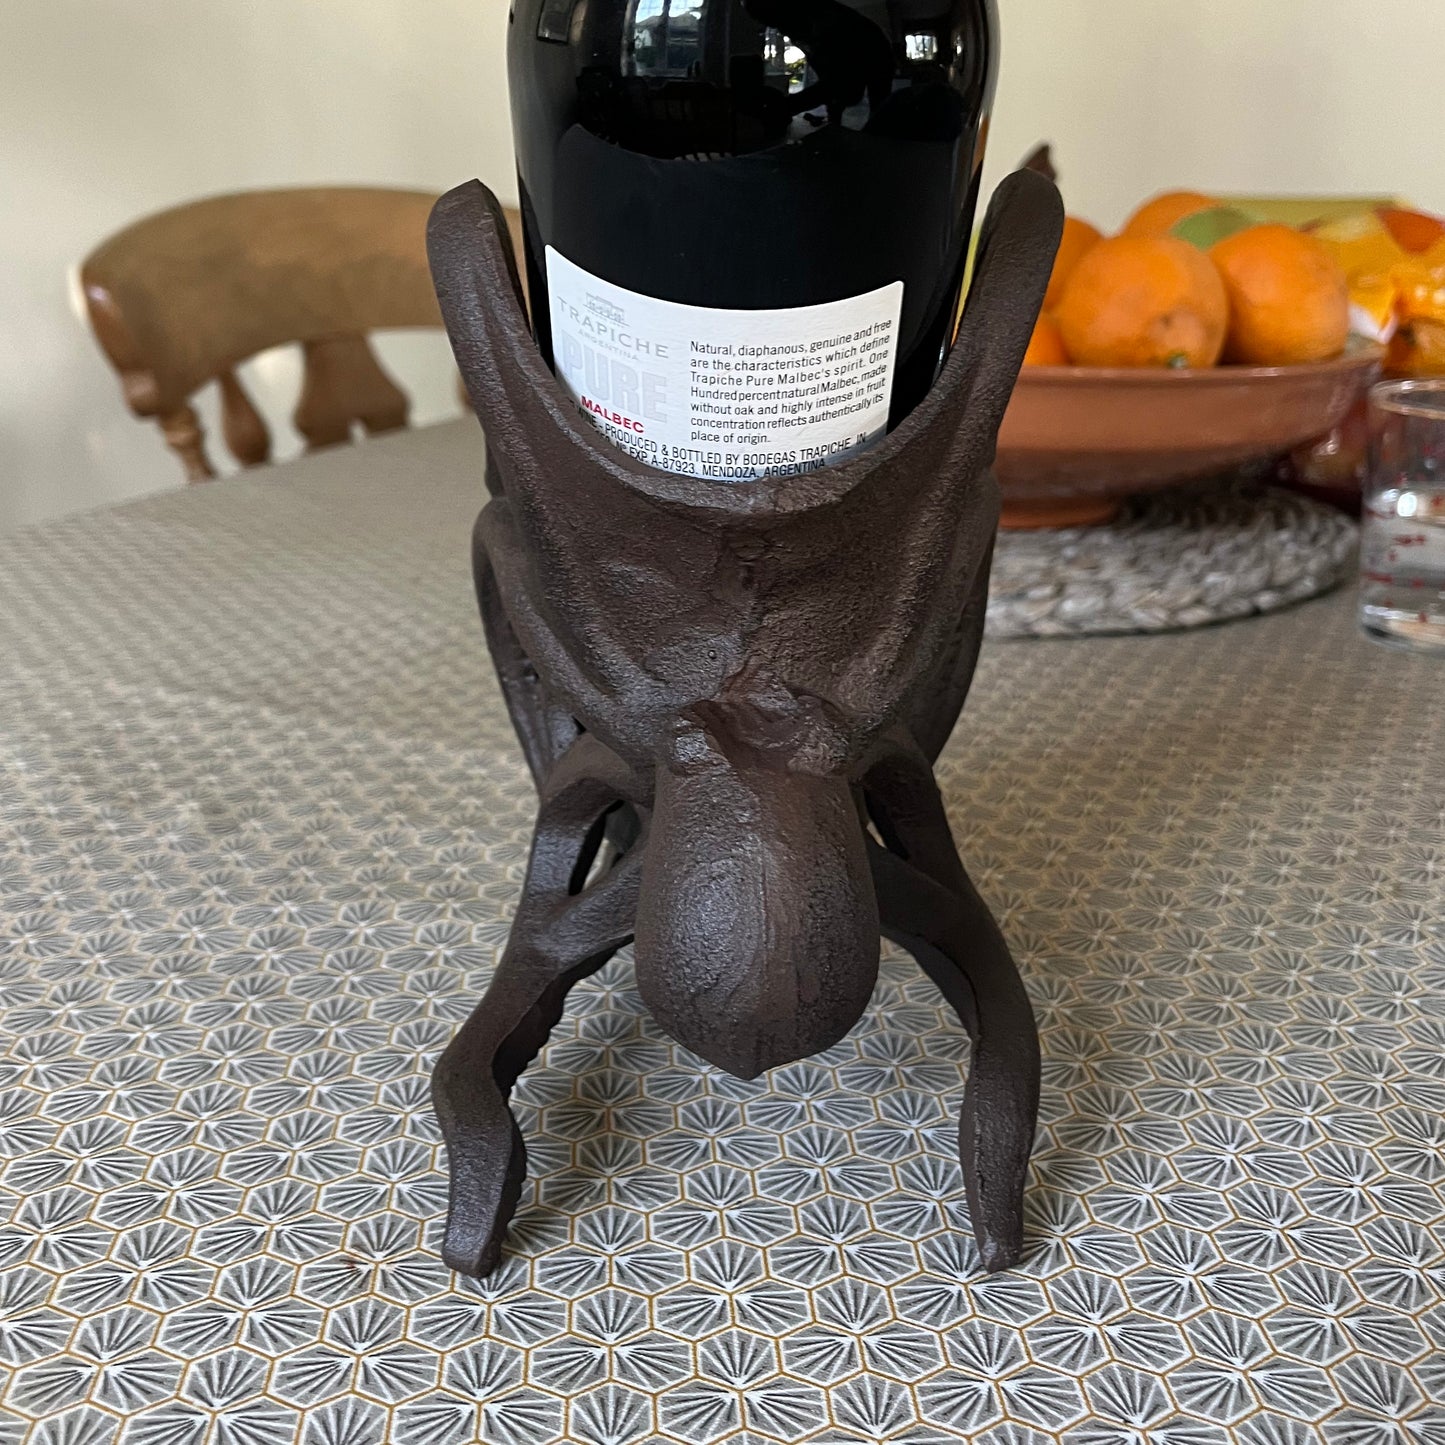 Cast Iron Octopus Shaped Wine Bottle Holder